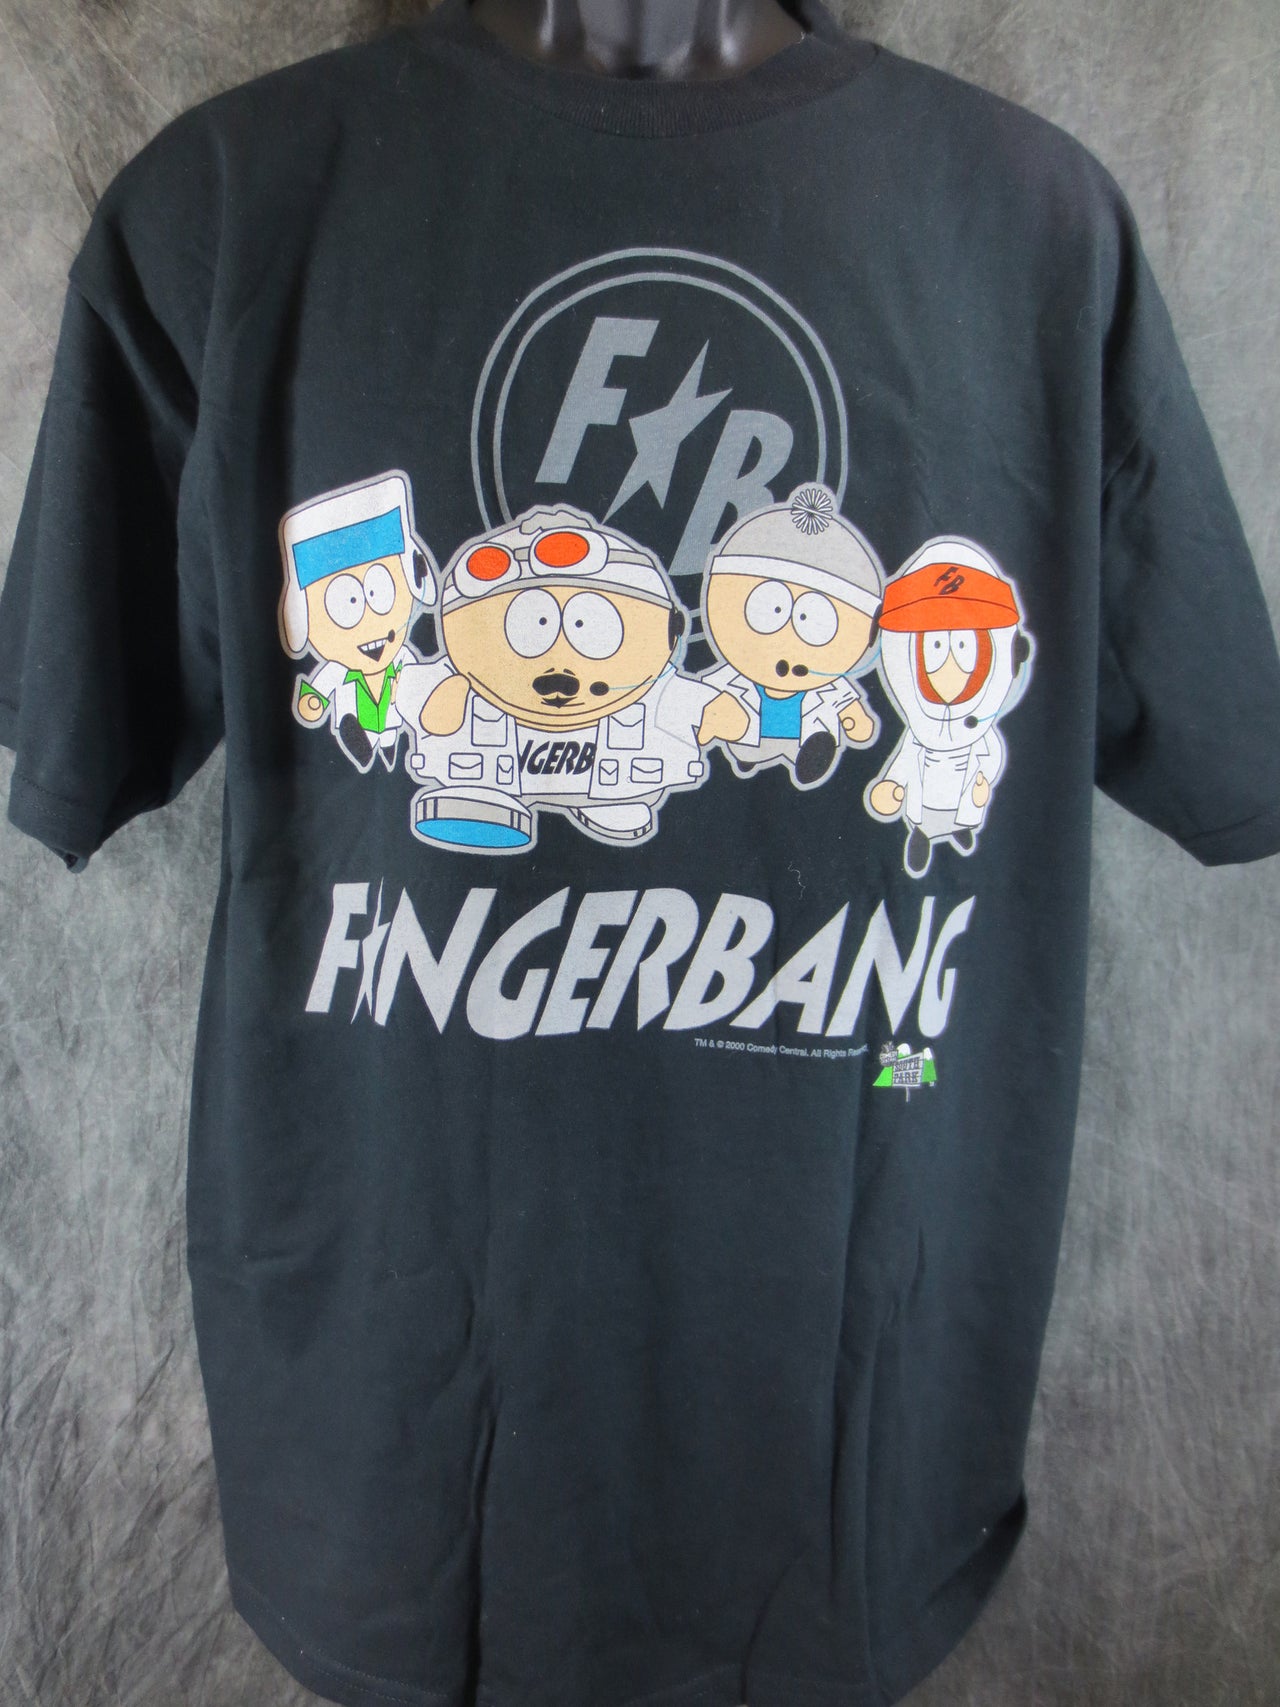 South Park Fingerbang Adult Black Size Large Tshirt - TshirtNow.net - 4